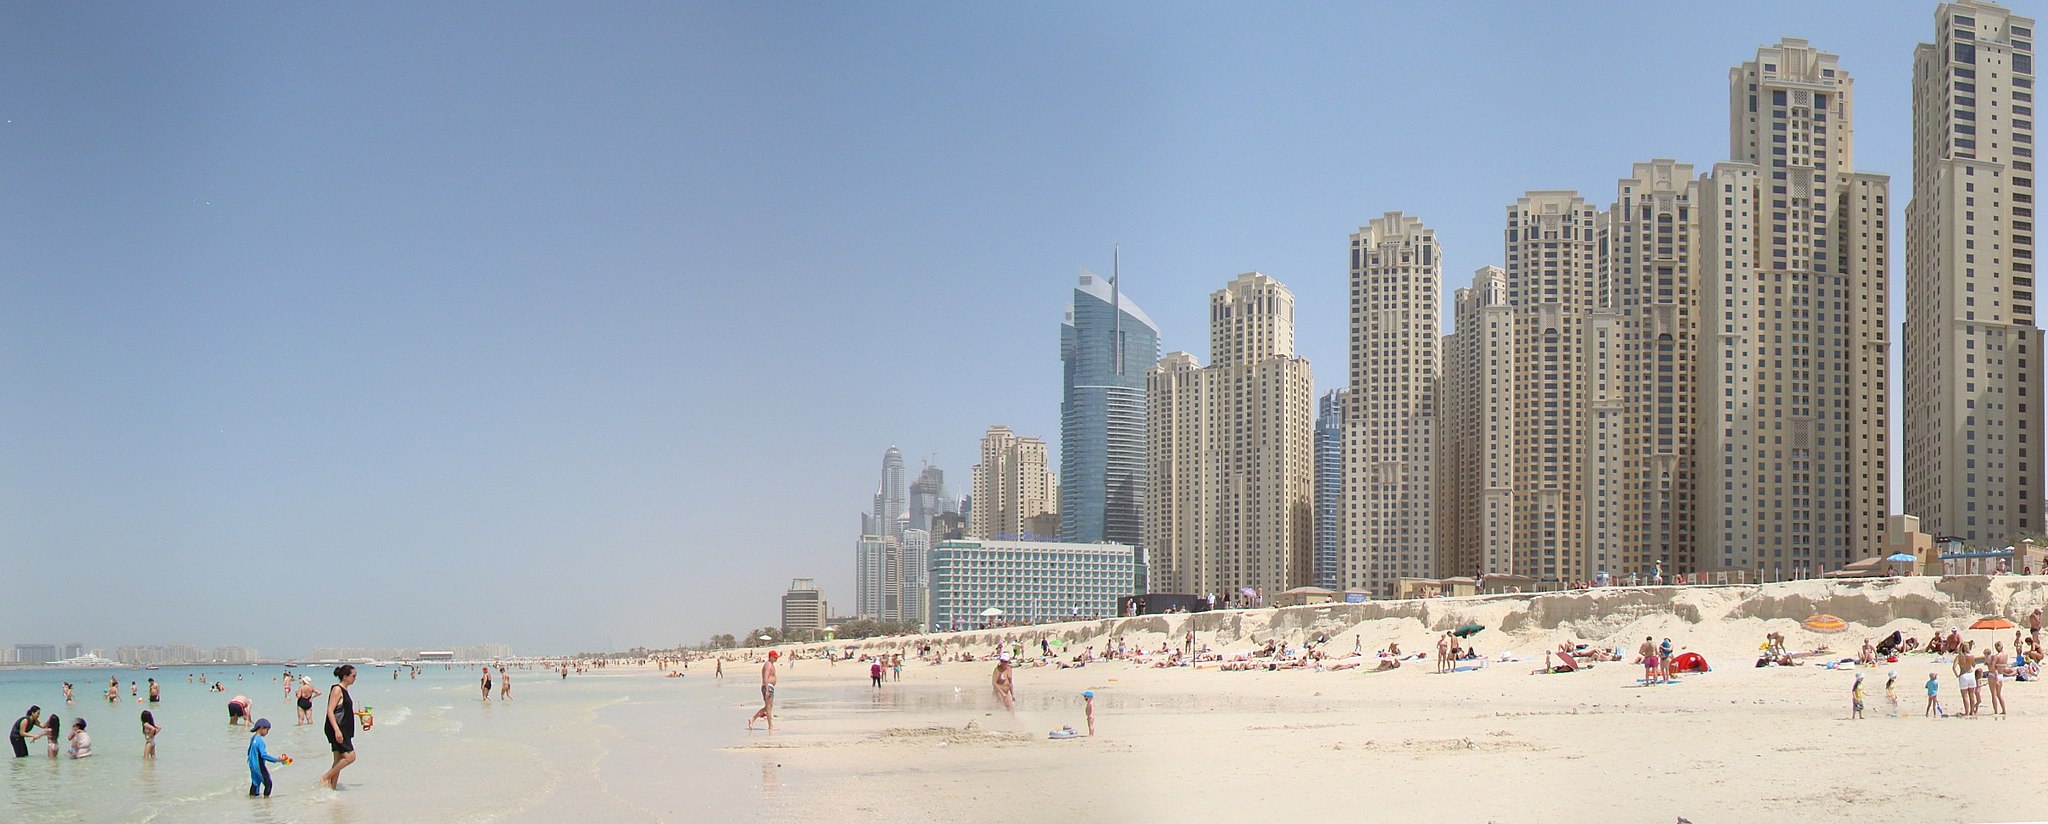 Dubai Marina Beach (Image by Sergey Safonov/Wikicommons)